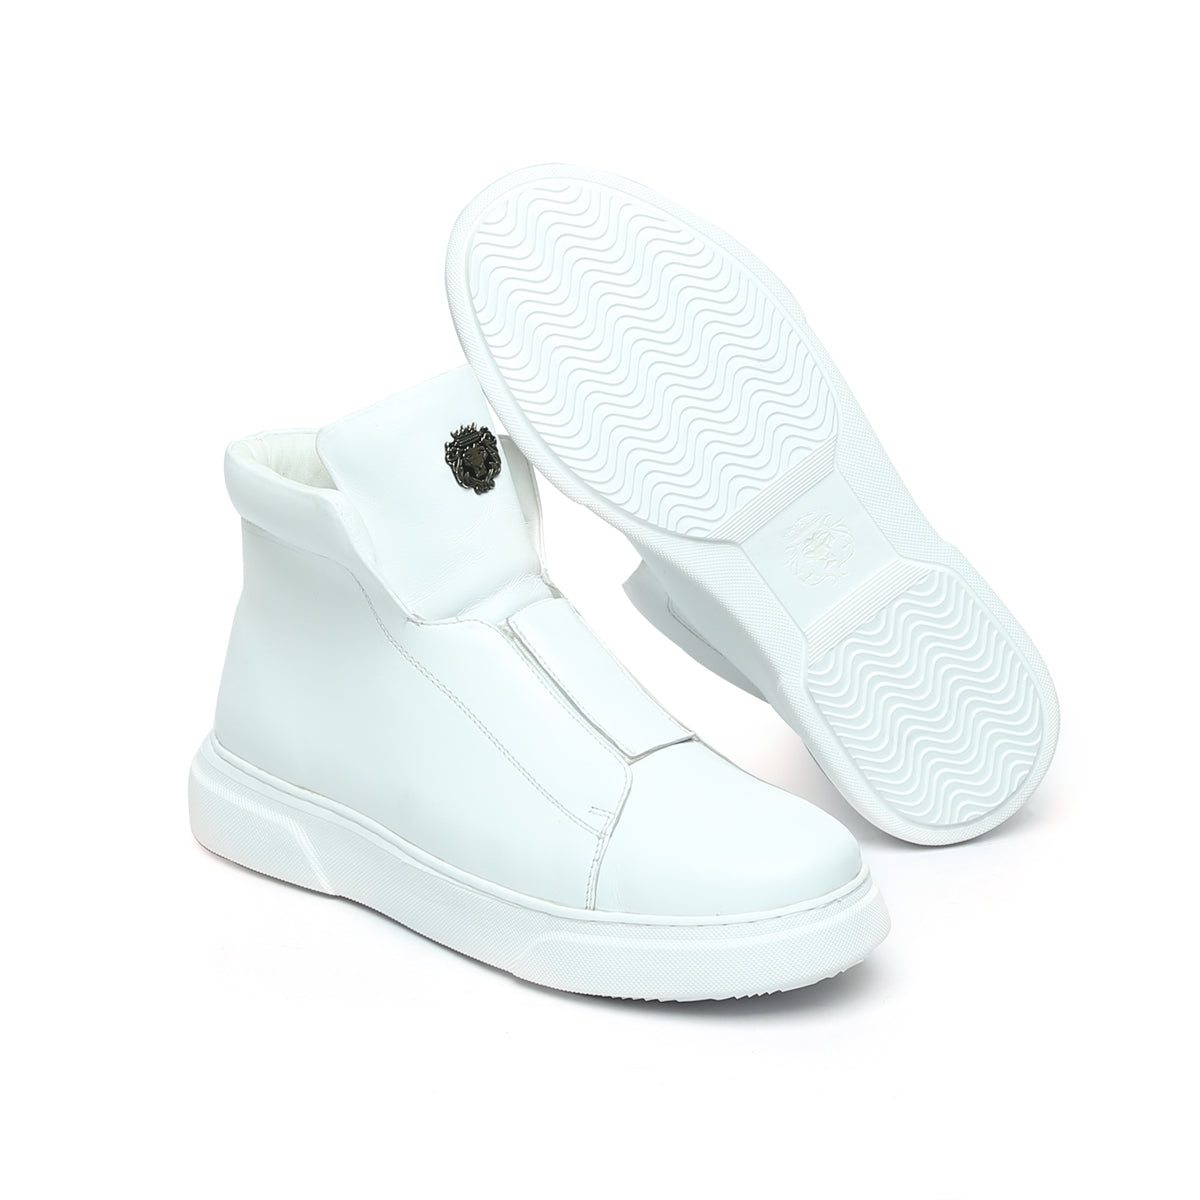 55% OFF on HIGHLANDER Men White Solid Sneakers on Myntra | PaisaWapas.com